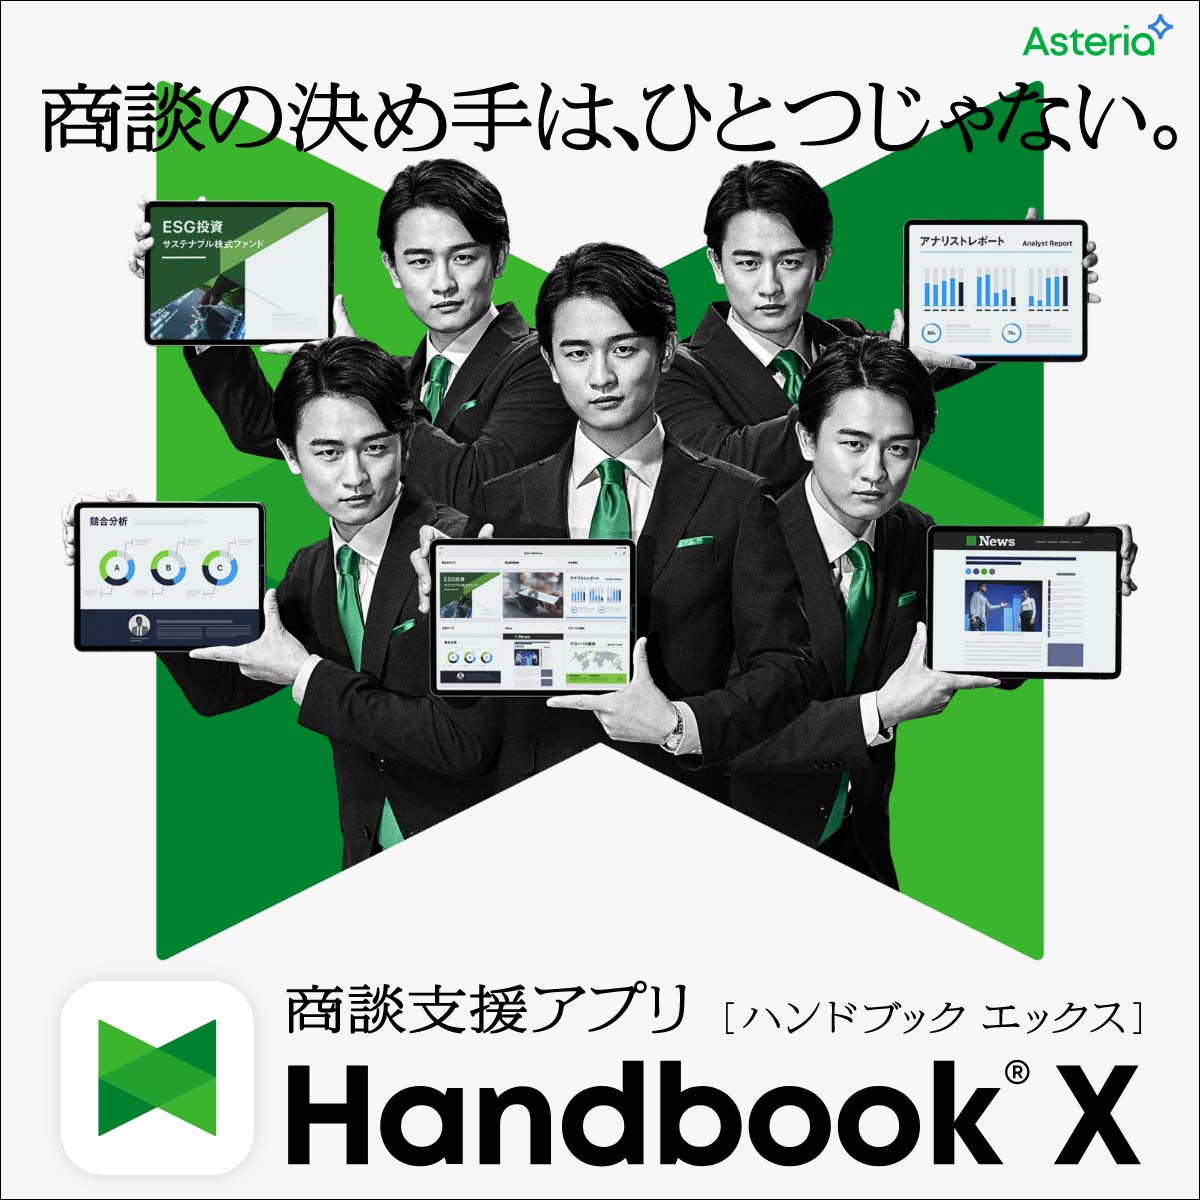 Handbook X